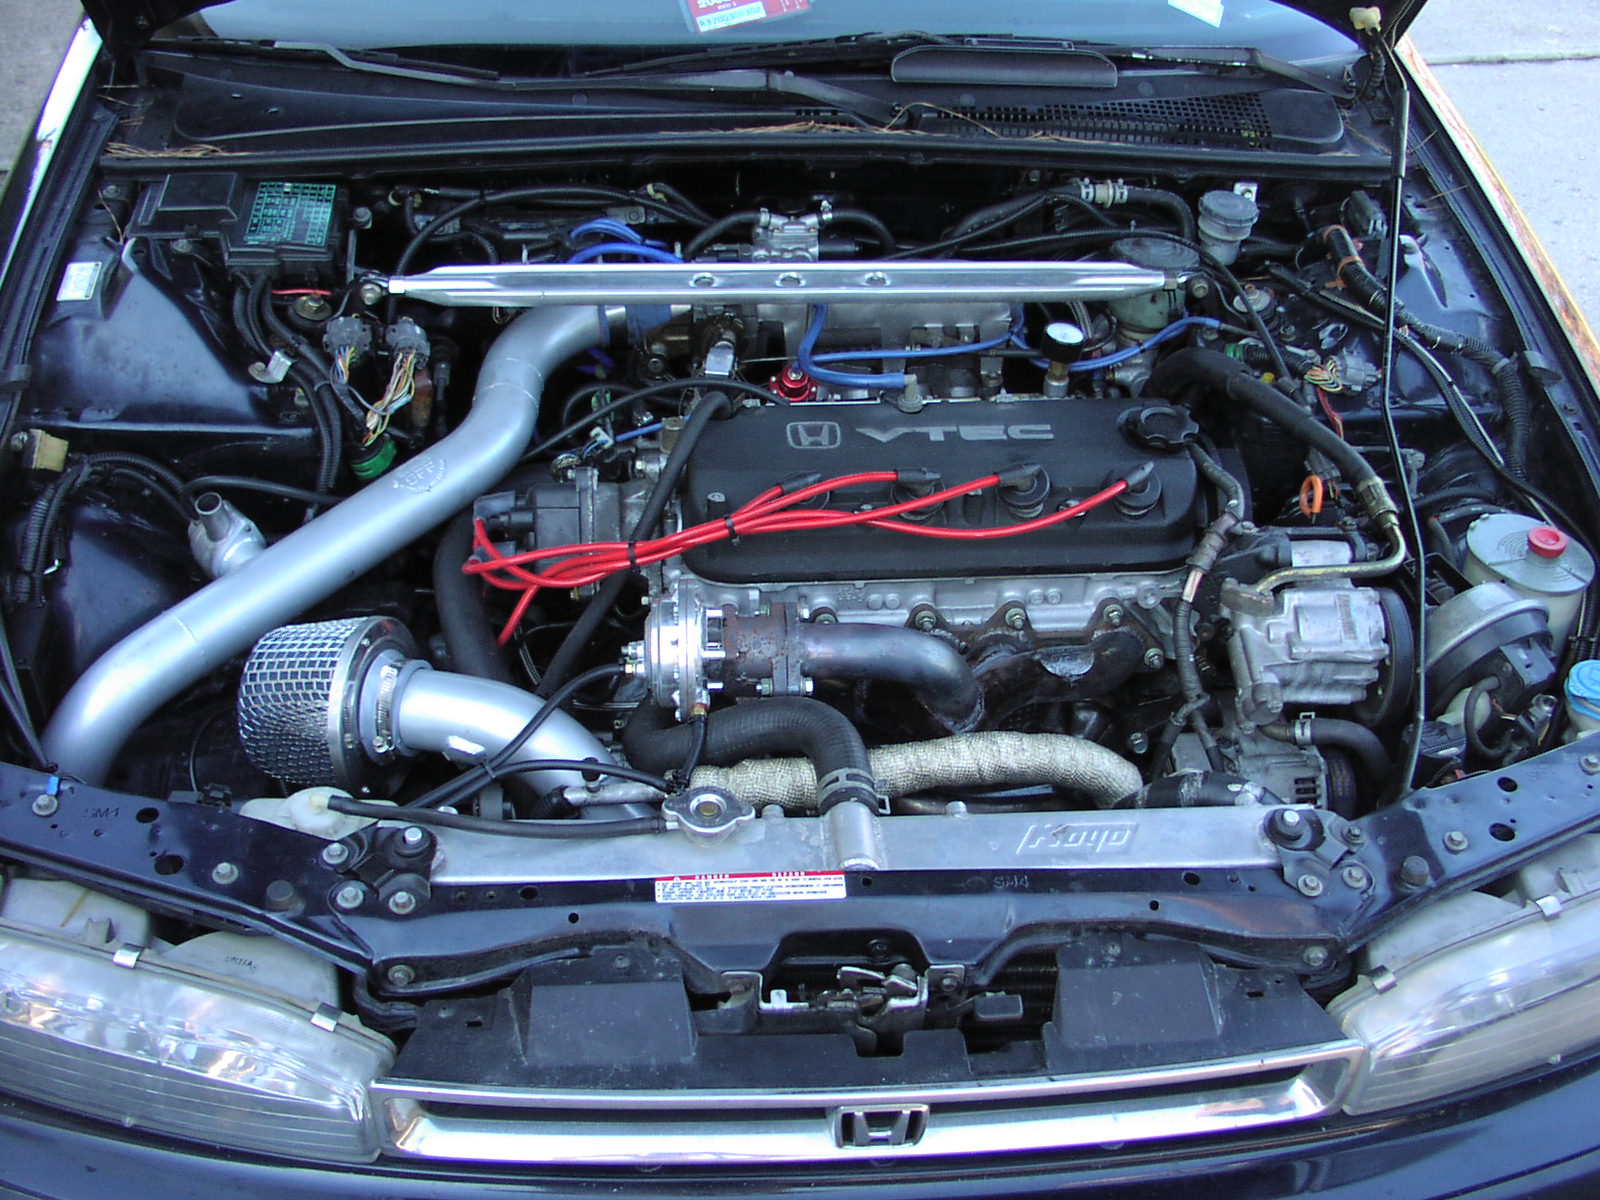 2001 Honda accord v6 turbo kit